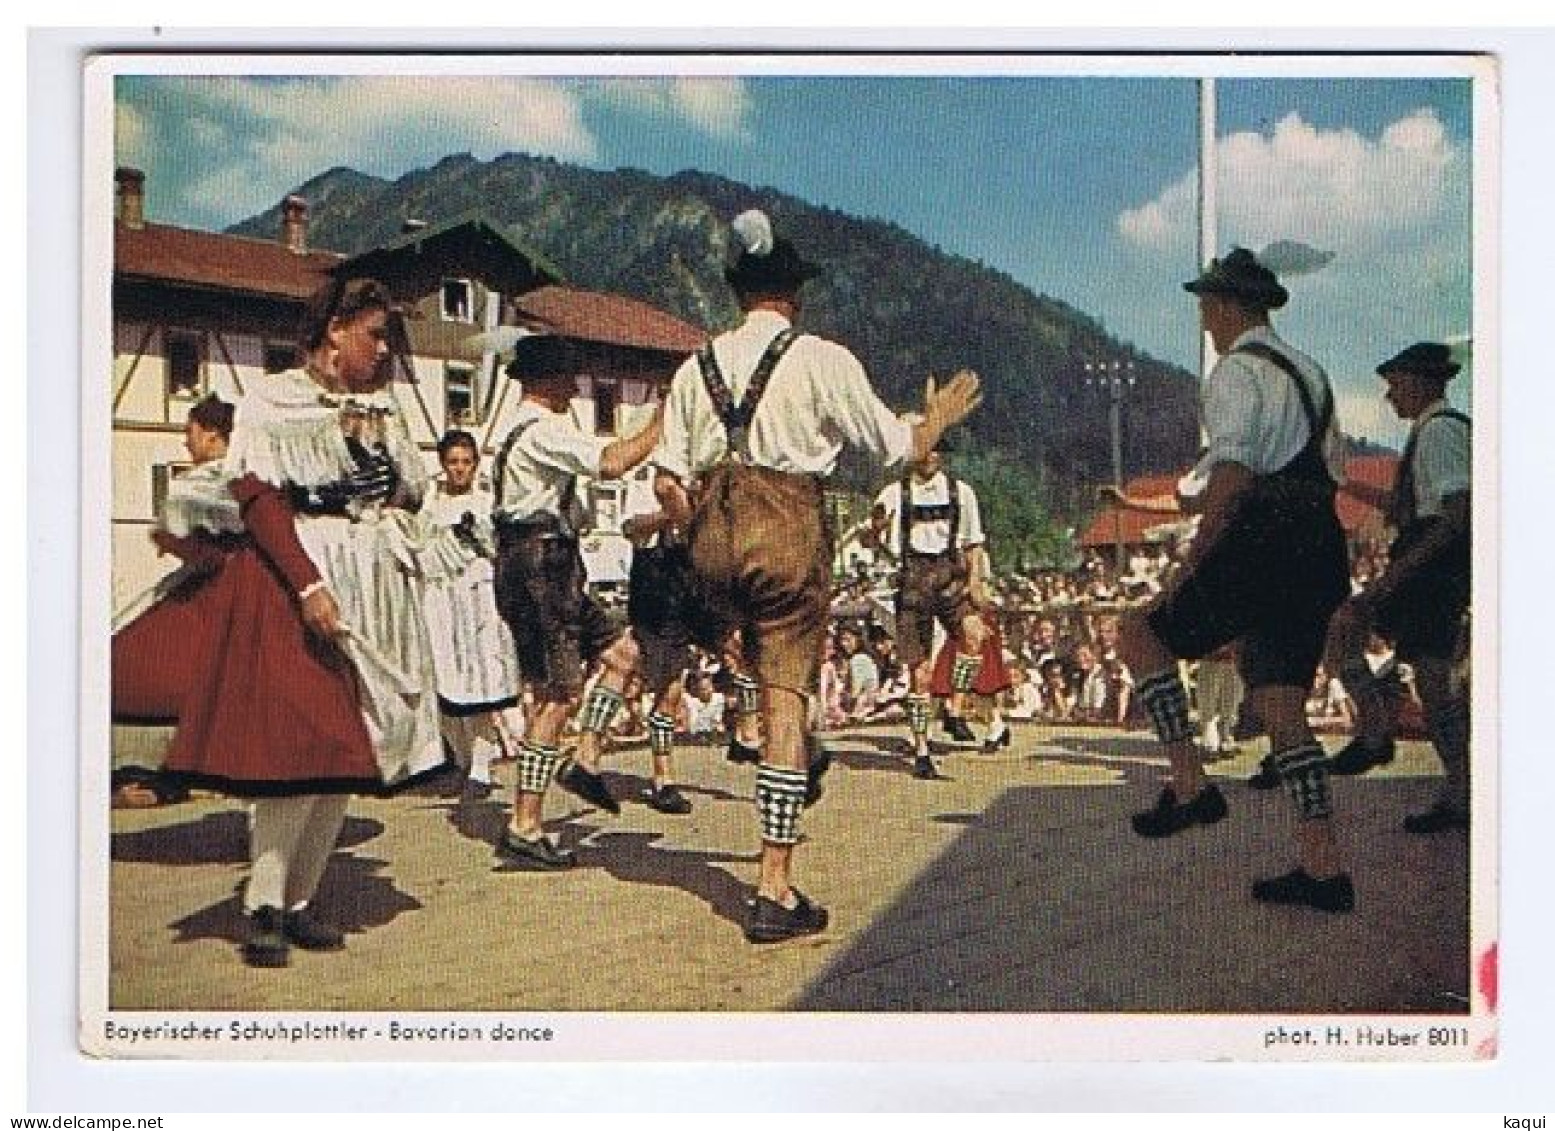 FOLKLORE - ALLEMAGNE - Bayer Schluhplasttler - Bavarian Dance - Kunstverlag Hans Huber - Nr 8011 - Danses